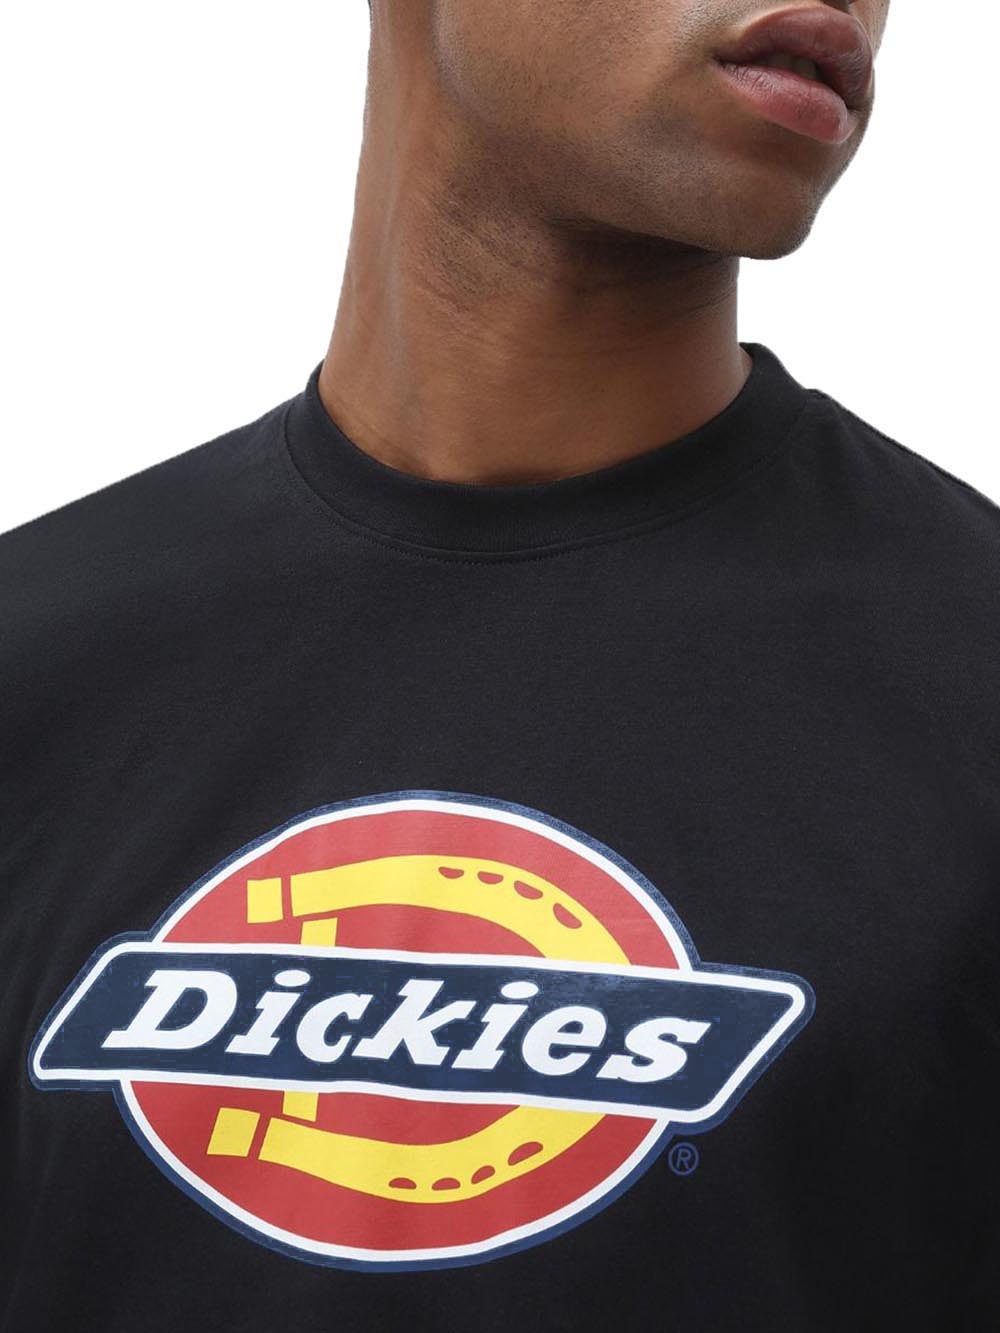 Dickies T-shirt Uomo Nero